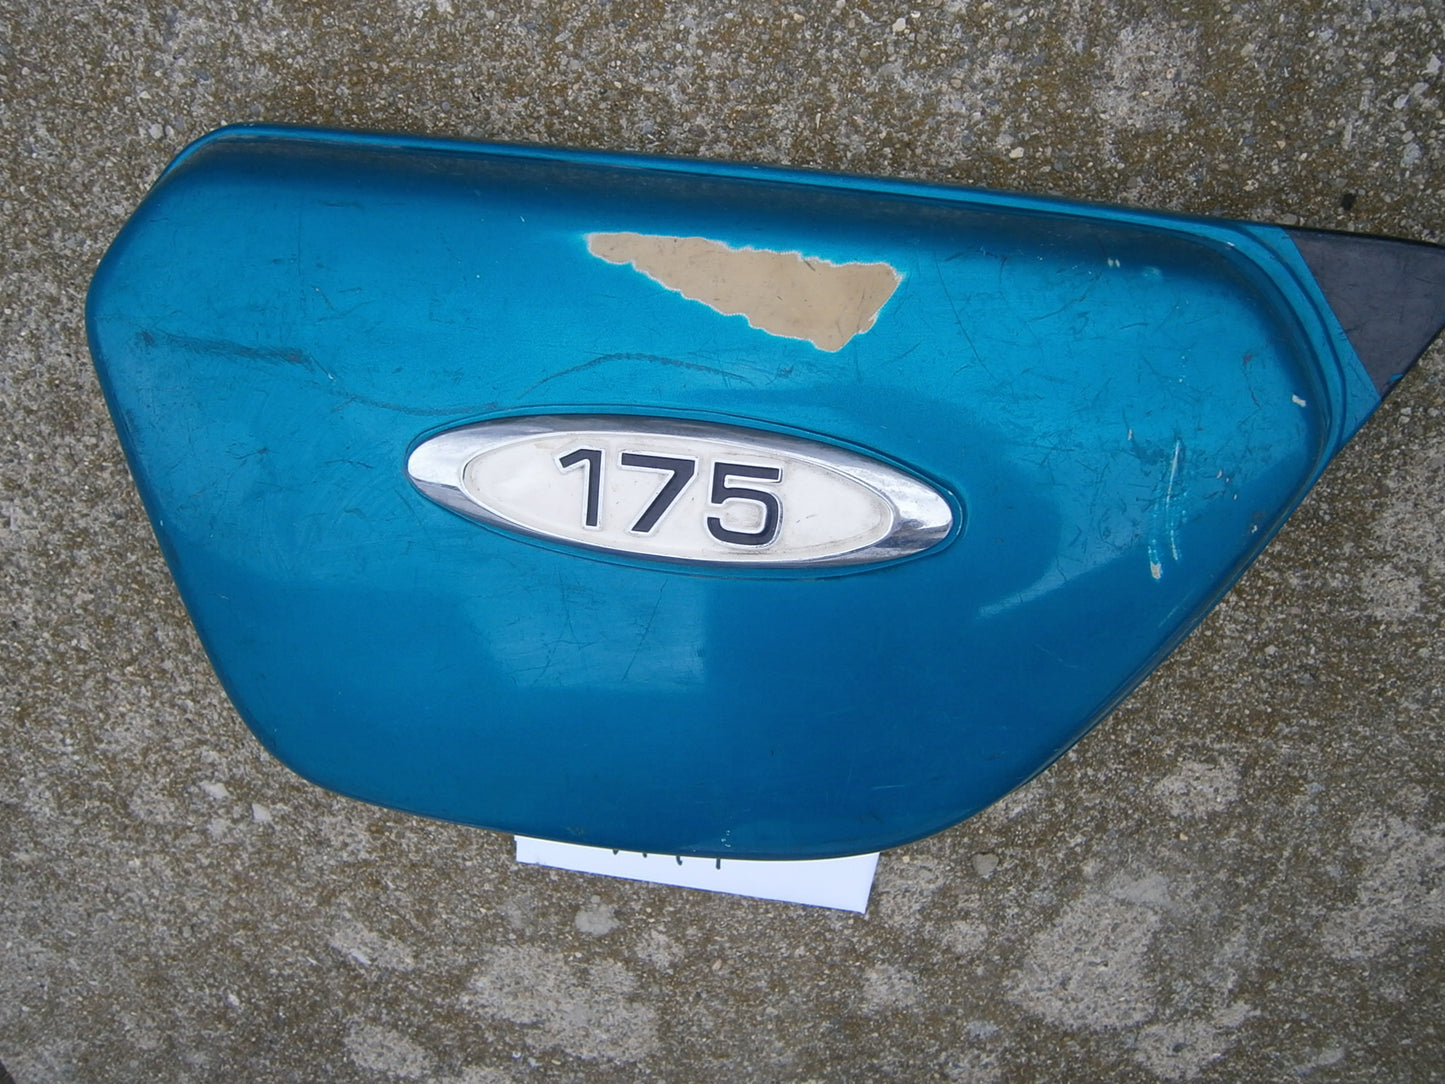 Sold on Ebay Honda CB175K4 K5 left  Blue Sidecover with. badge 17231-315-000    sku 4474